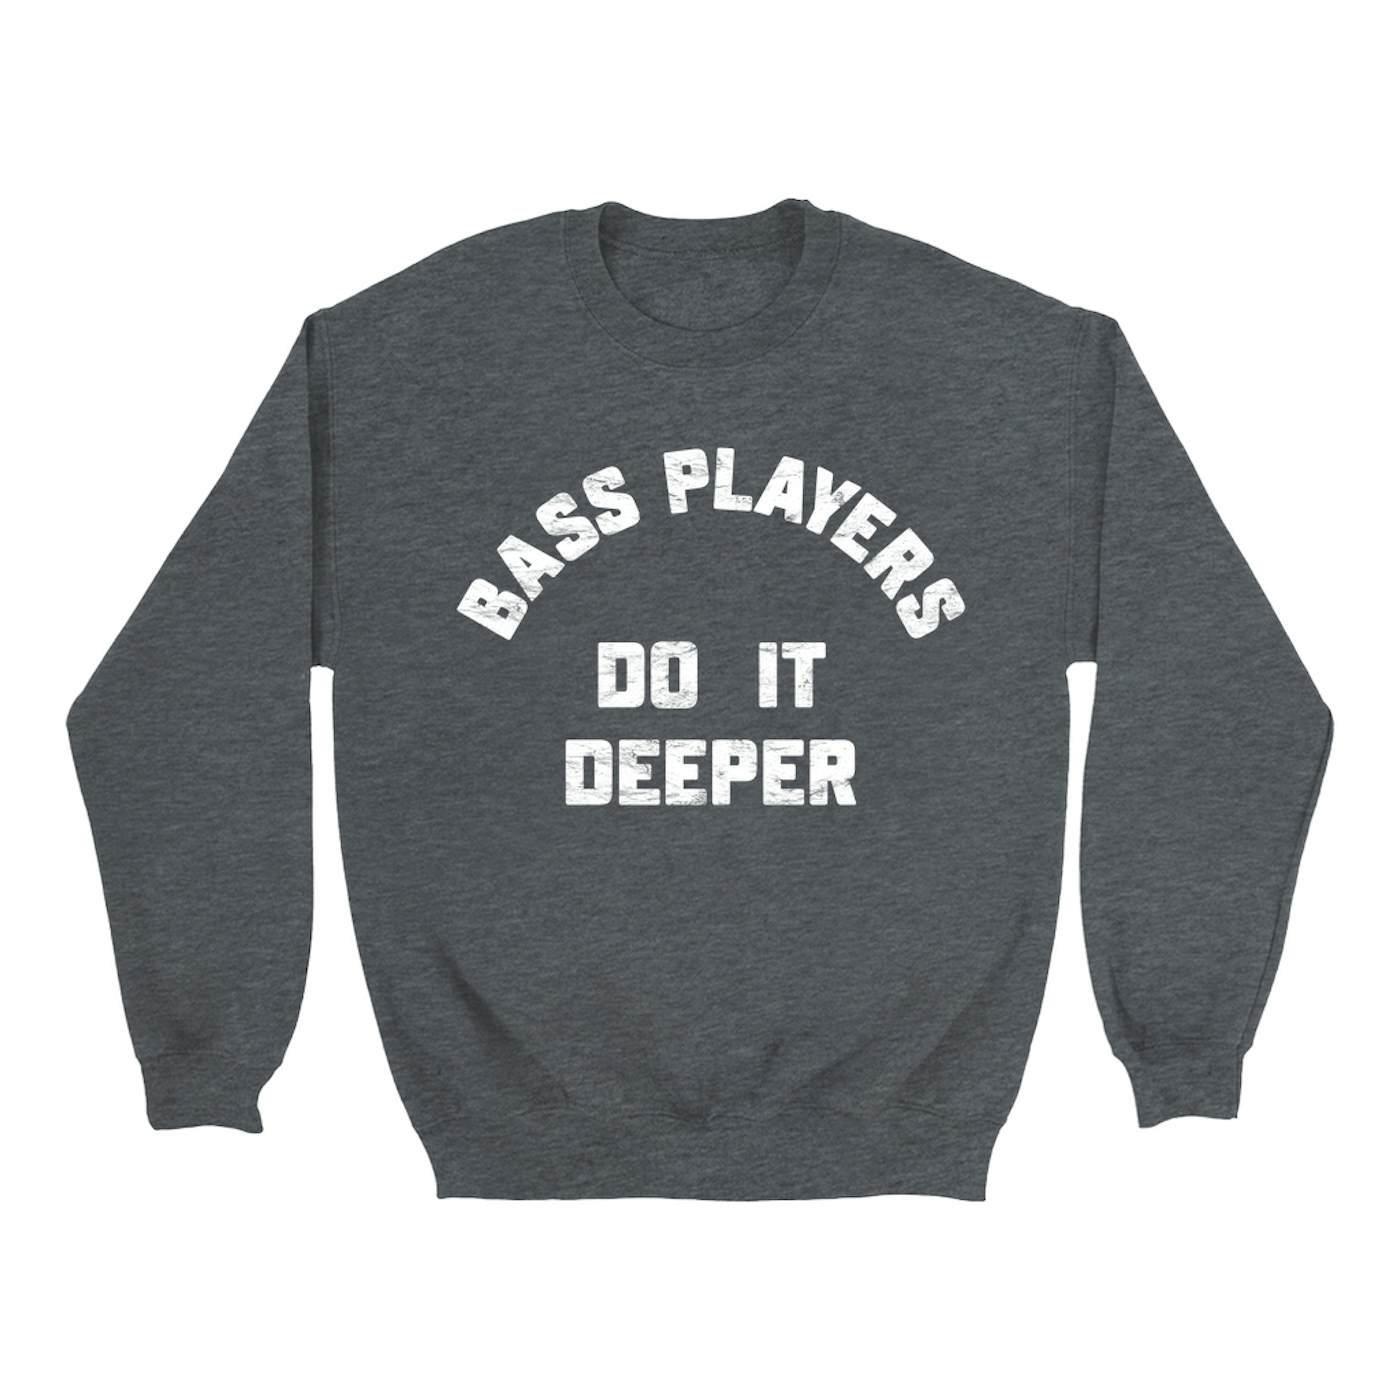 Def Leppard Sweatshirt | Bass Players Do It Worn By Rick Savage Def Leppard Sweatshirt